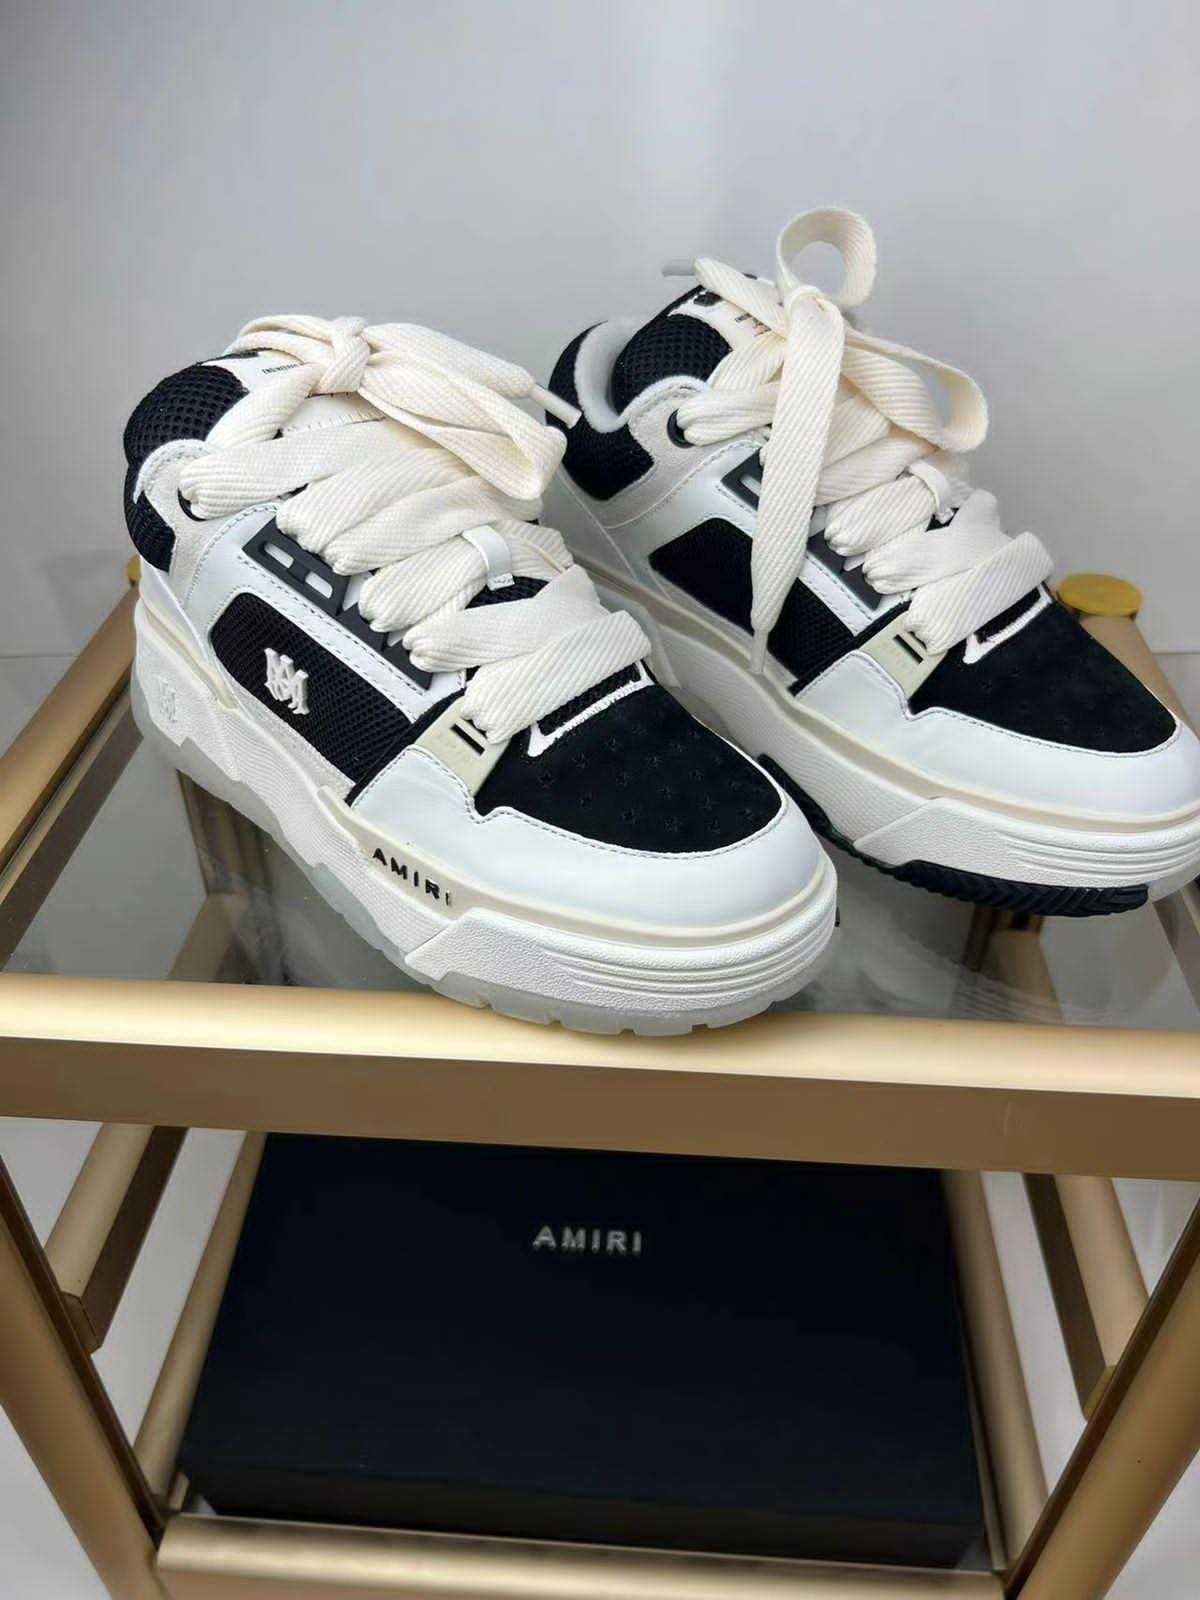 Adidasi AMIRI MA-1 Black&White